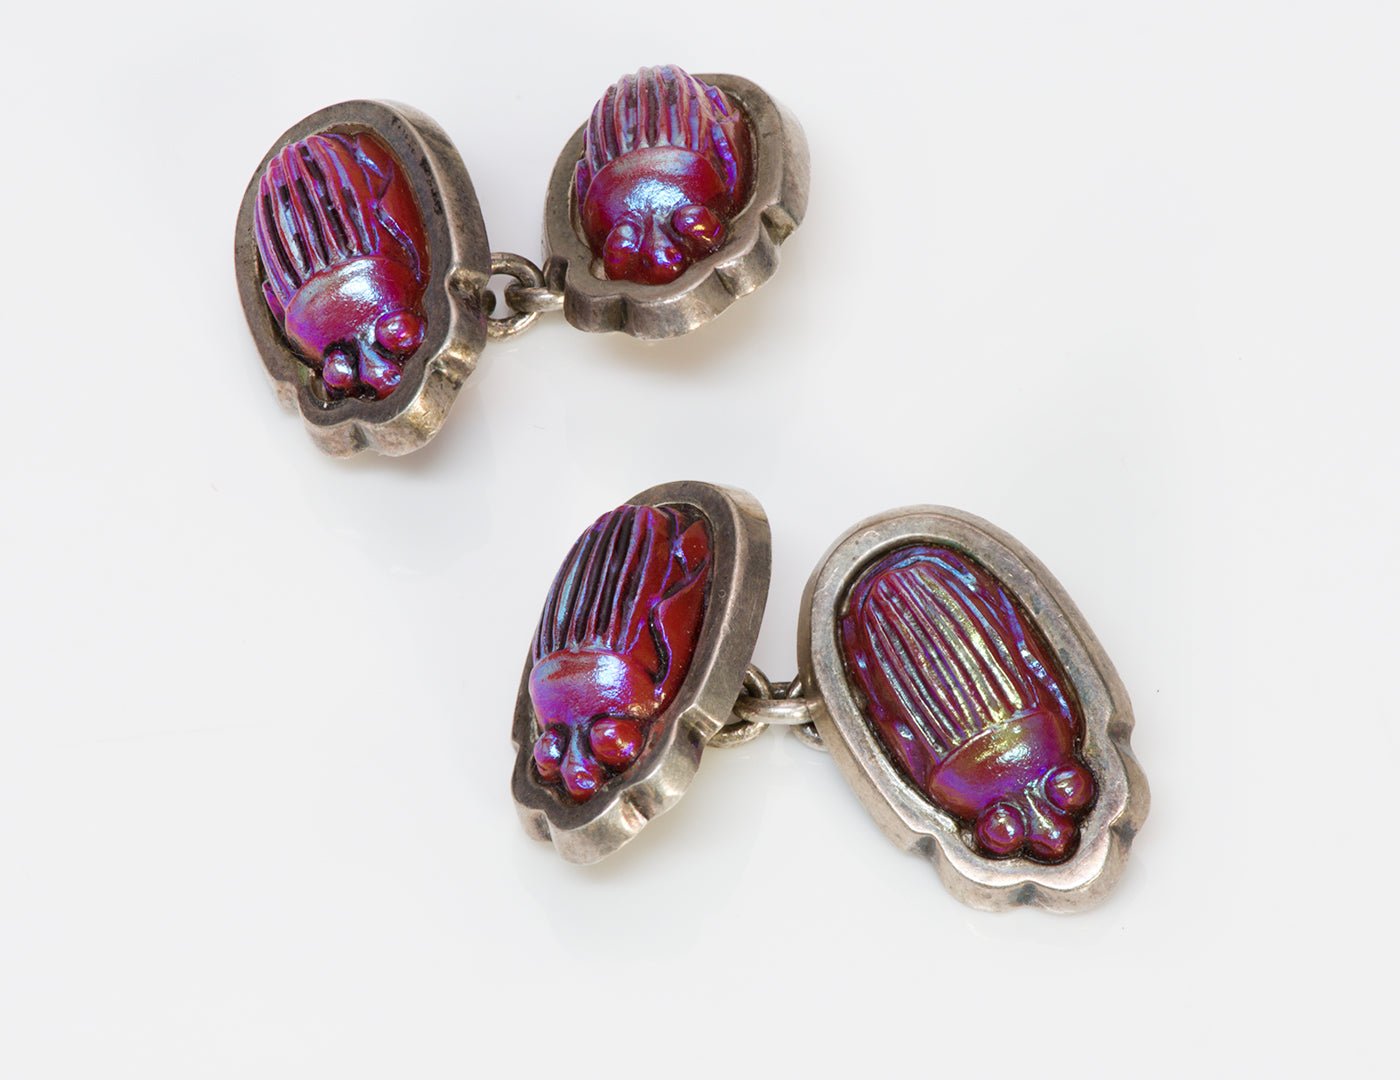 Tiffany & Co. Studios Sterling Favrile Iridescent Glass Scarab Cufflinks